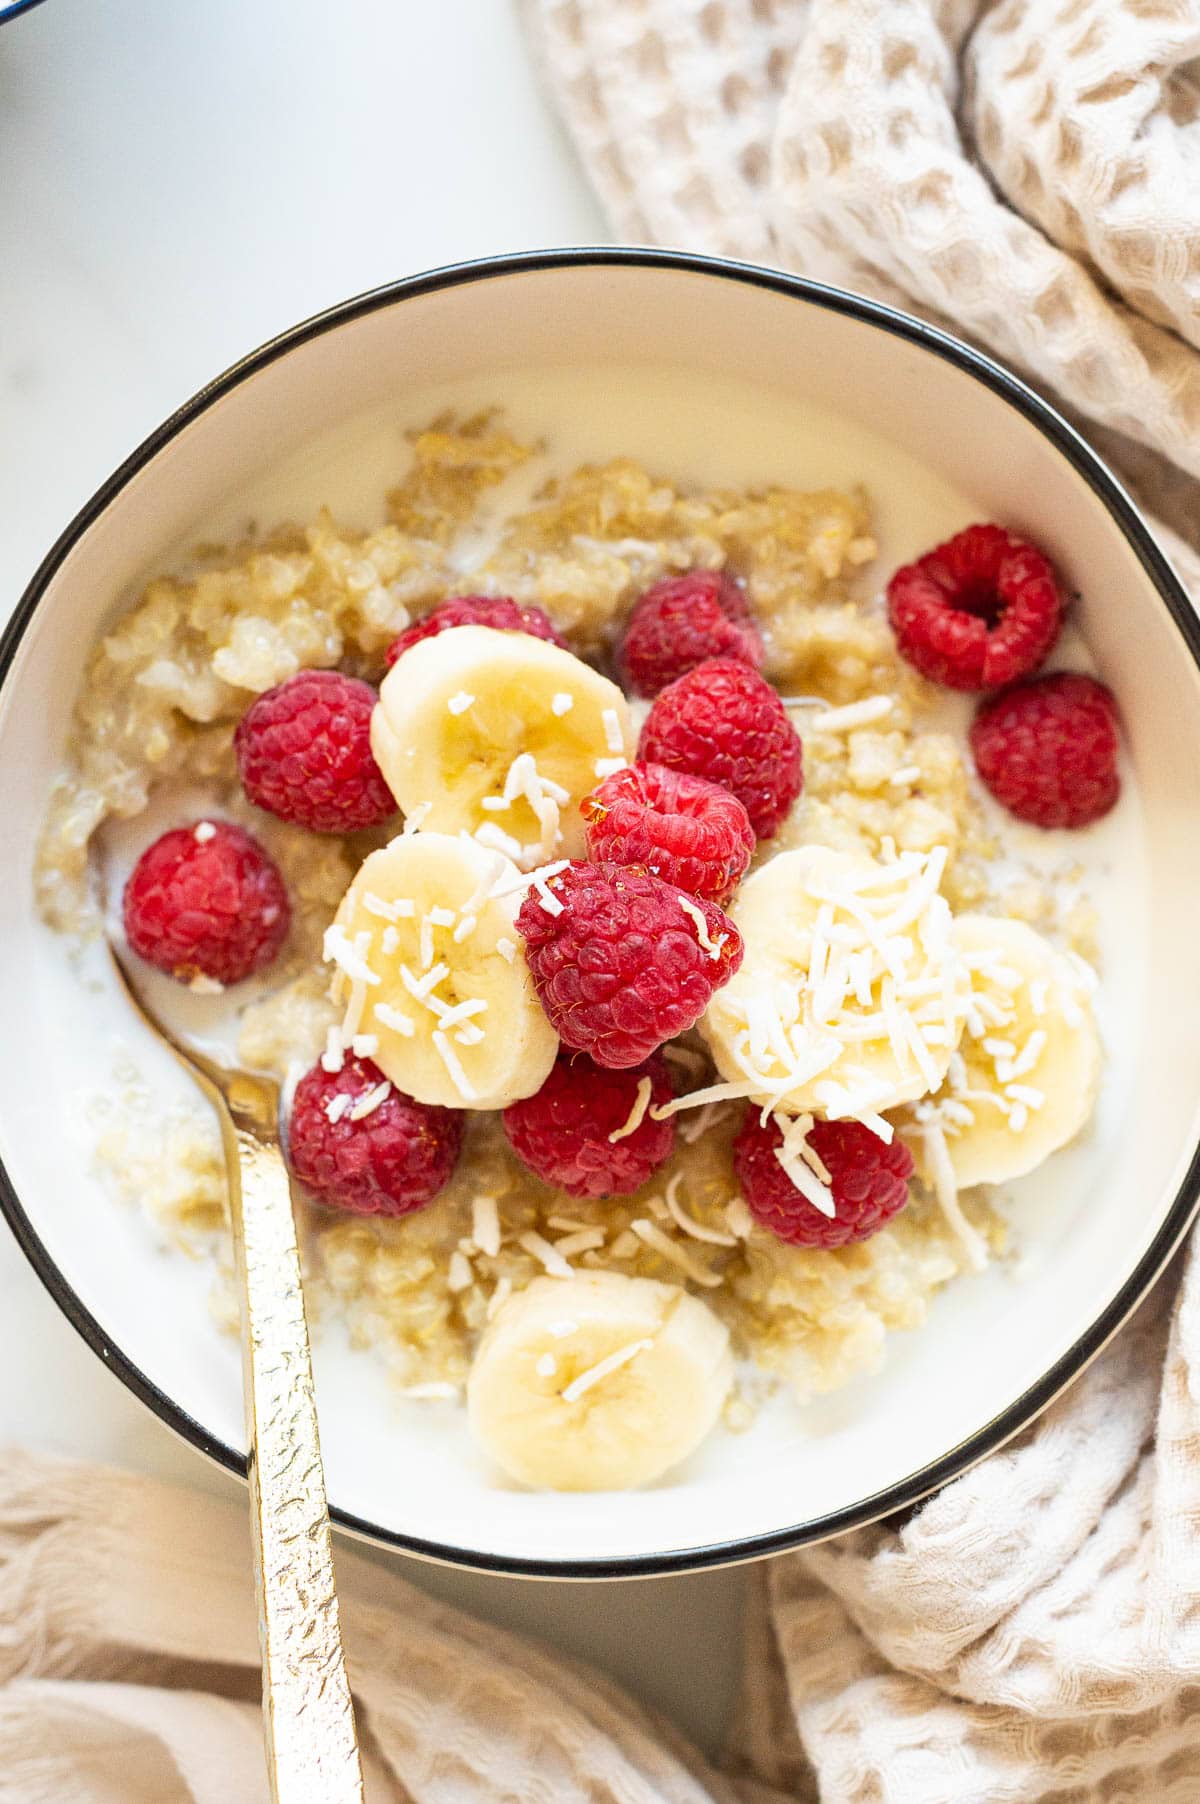 Quinoa breakfast bowl garnished with raspberries and banana.